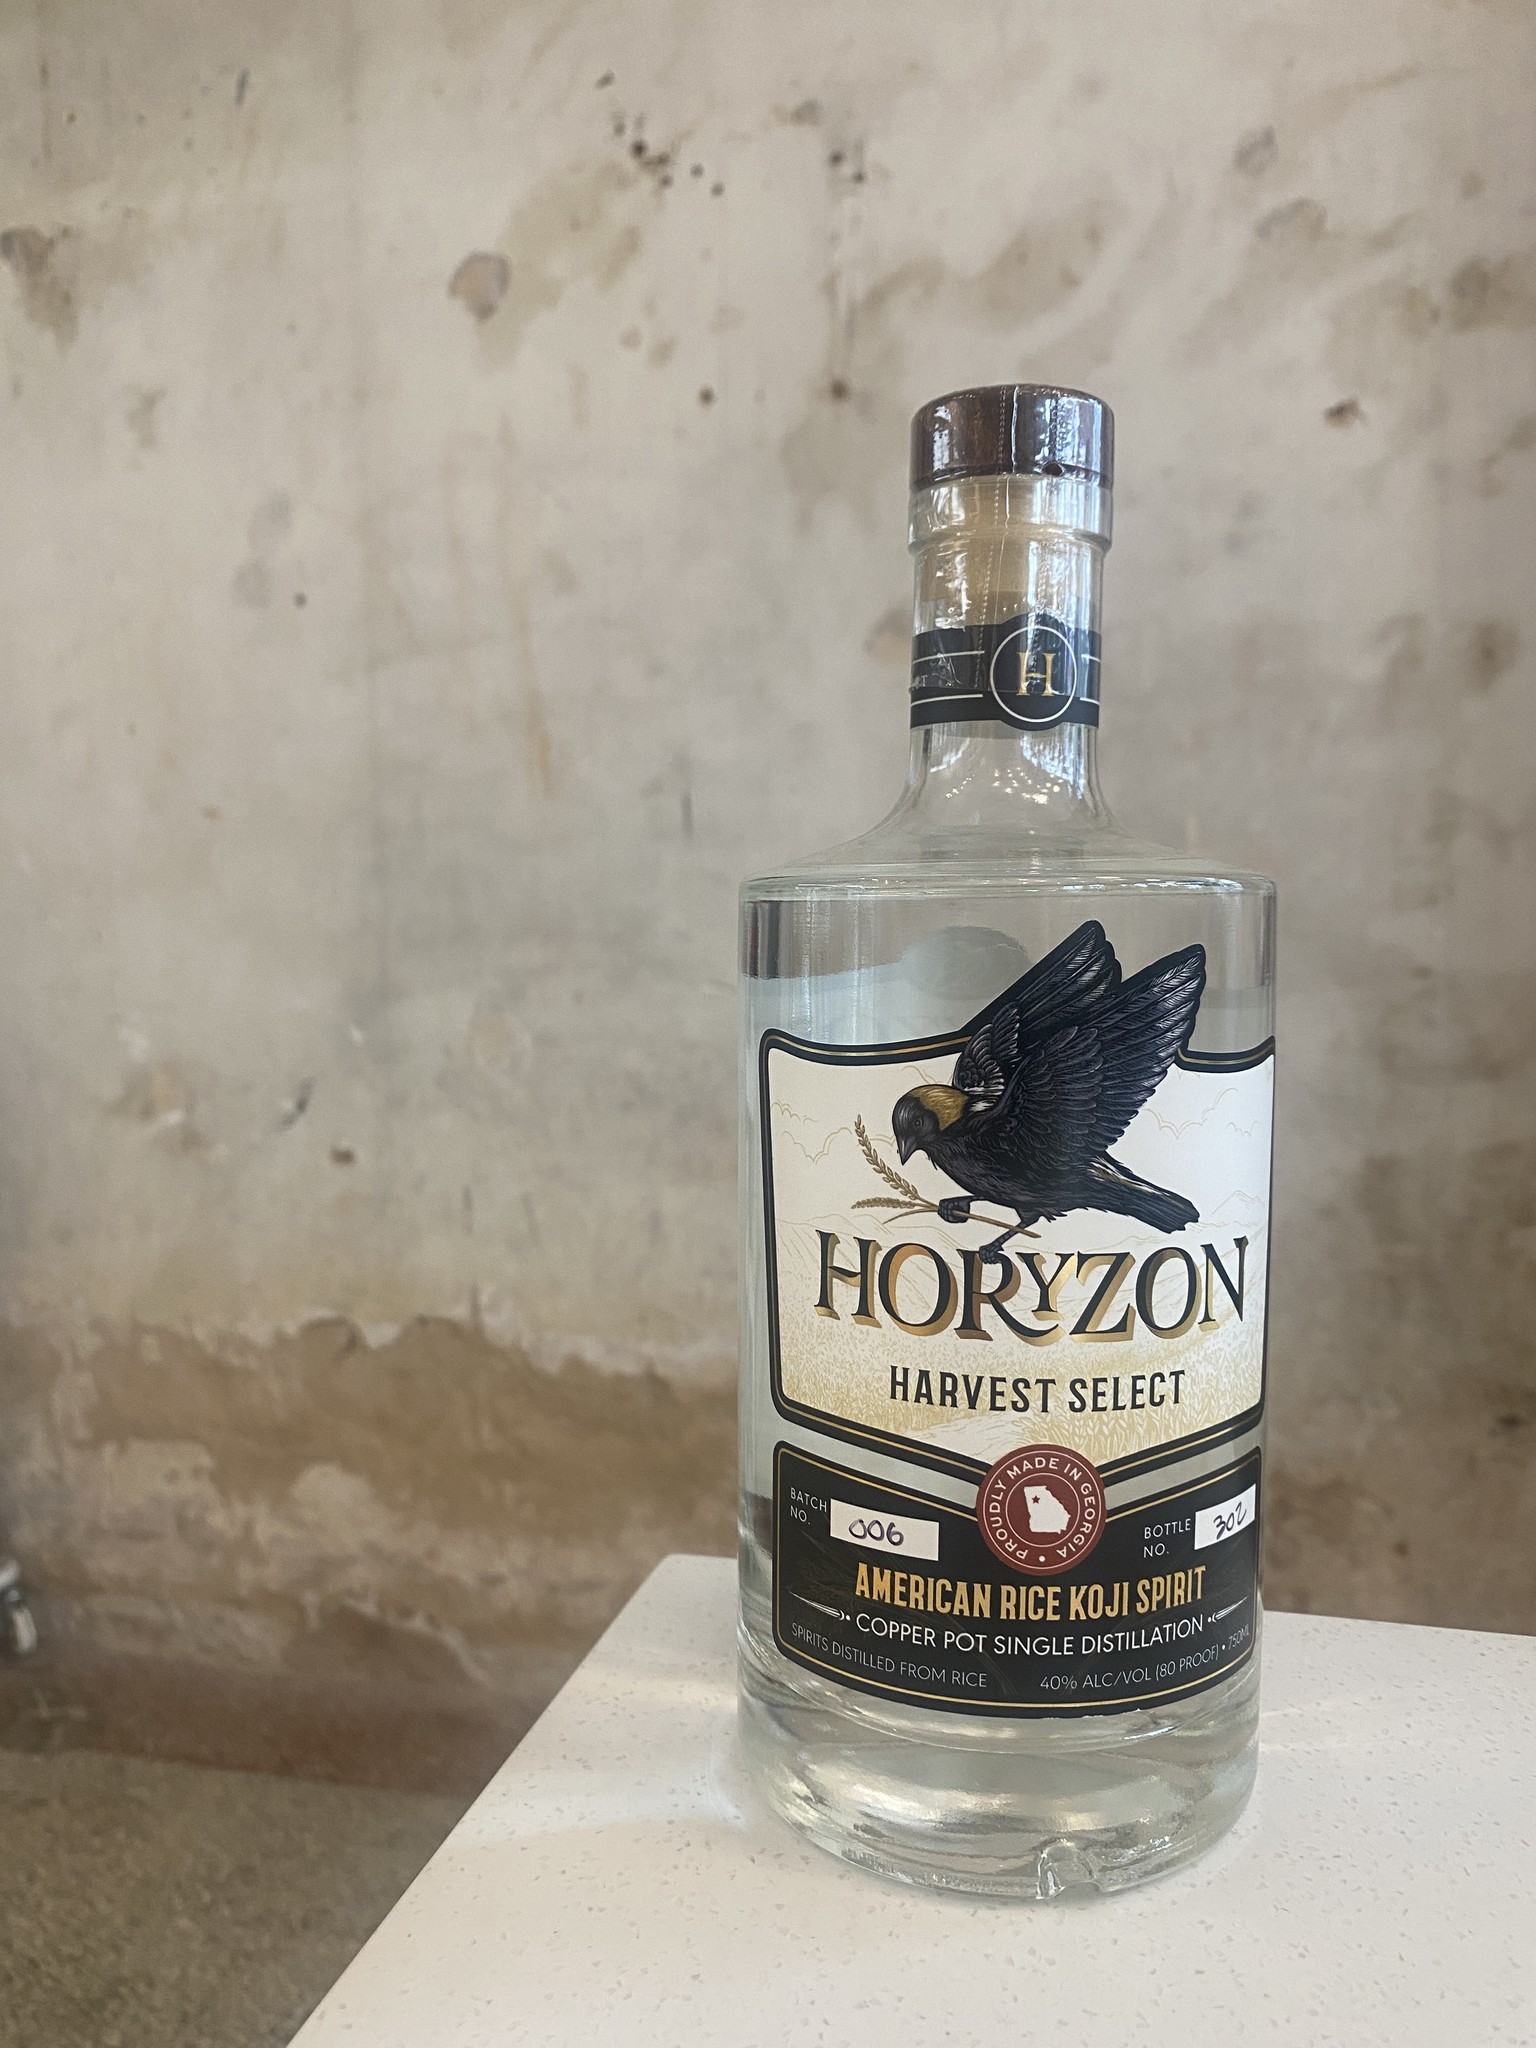 Horyzon Horyzon Harvest Select Rice Based Spirit